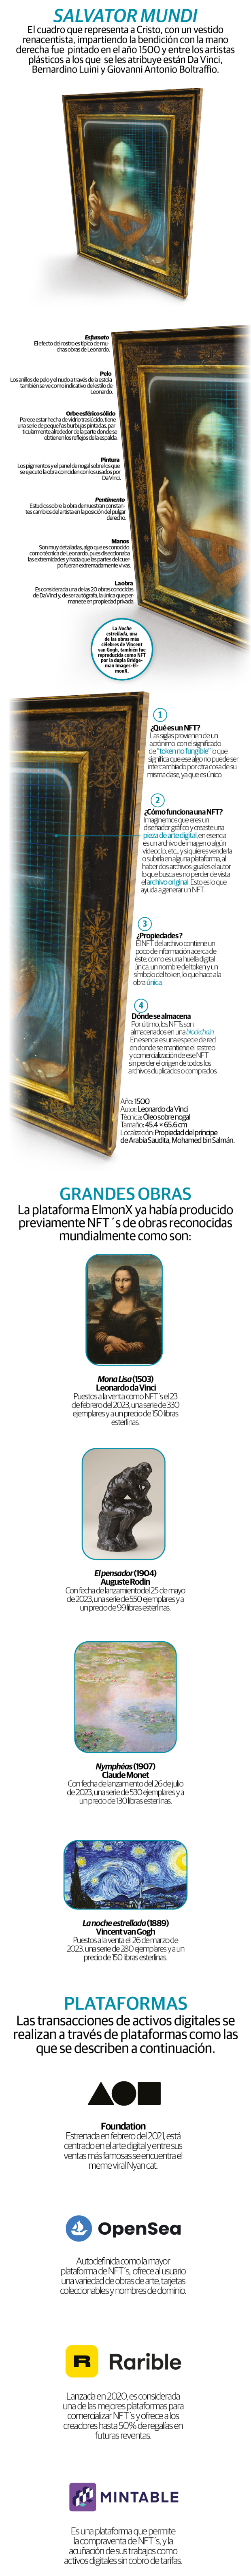 El Salvator Mundi, un cuadro polémico atribuido a Leonardo da Vinci, reaparece en forma de NFT